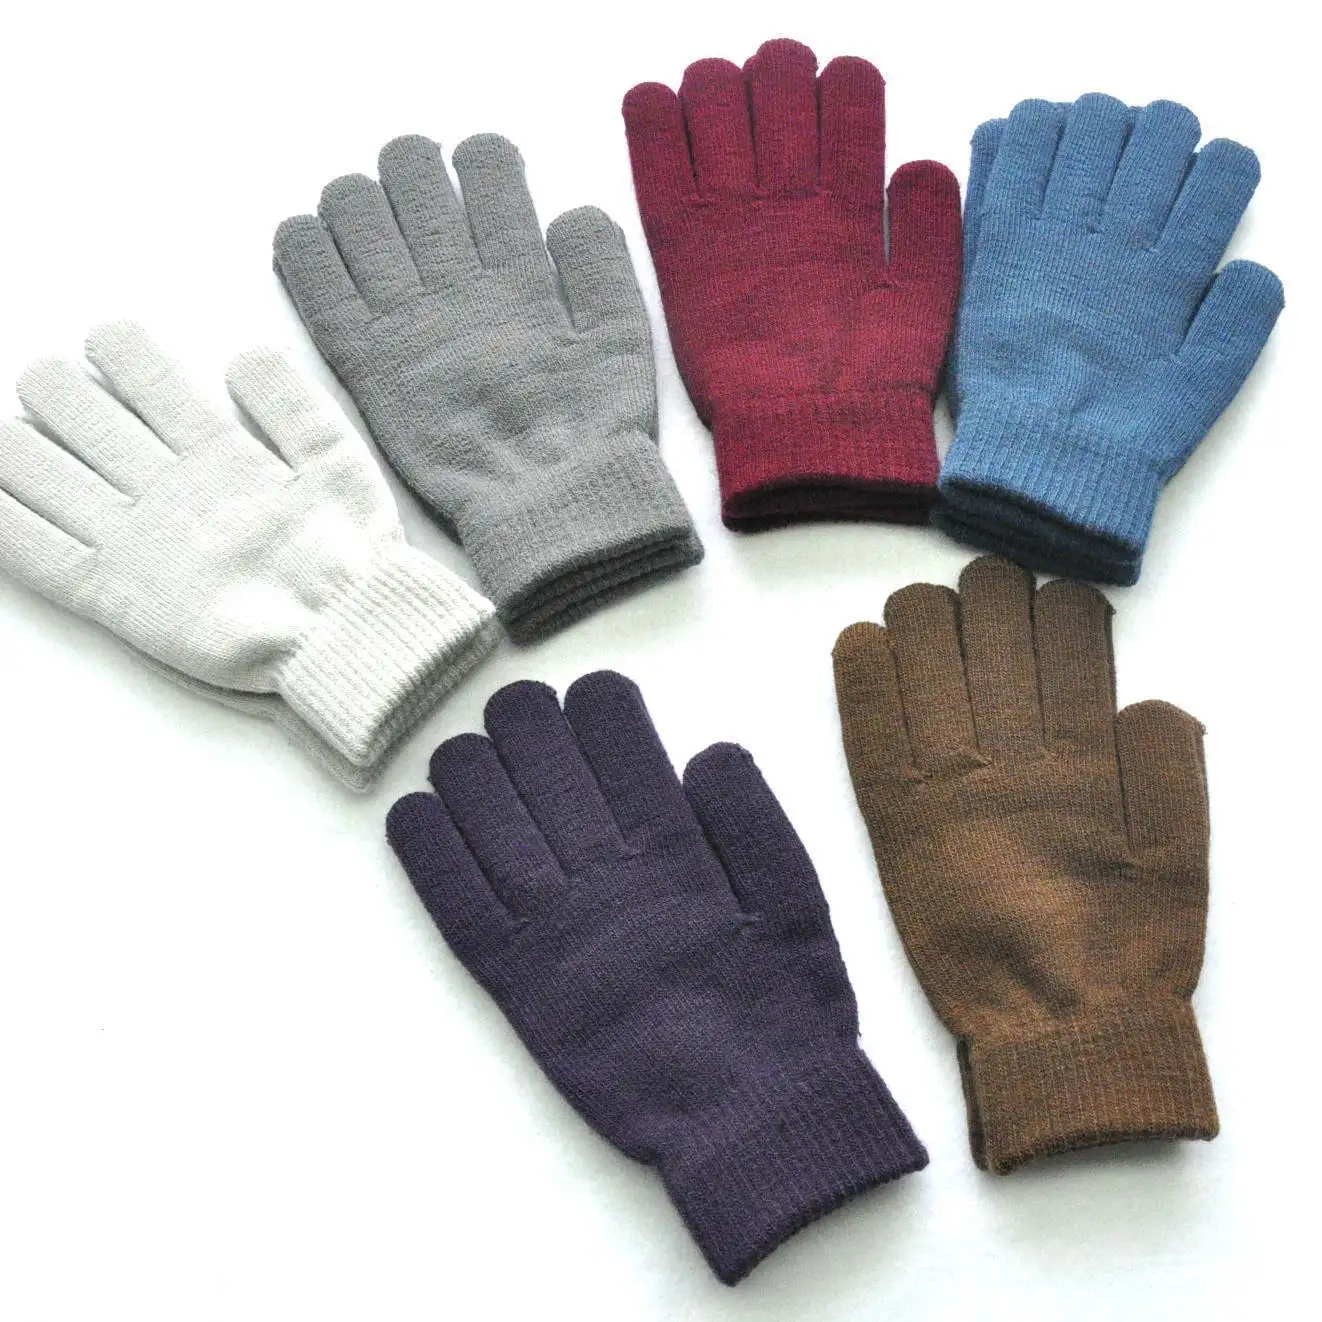 Sarung tangan kasmir rajut wanita, sarung tangan 100% musim gugur musim dingin